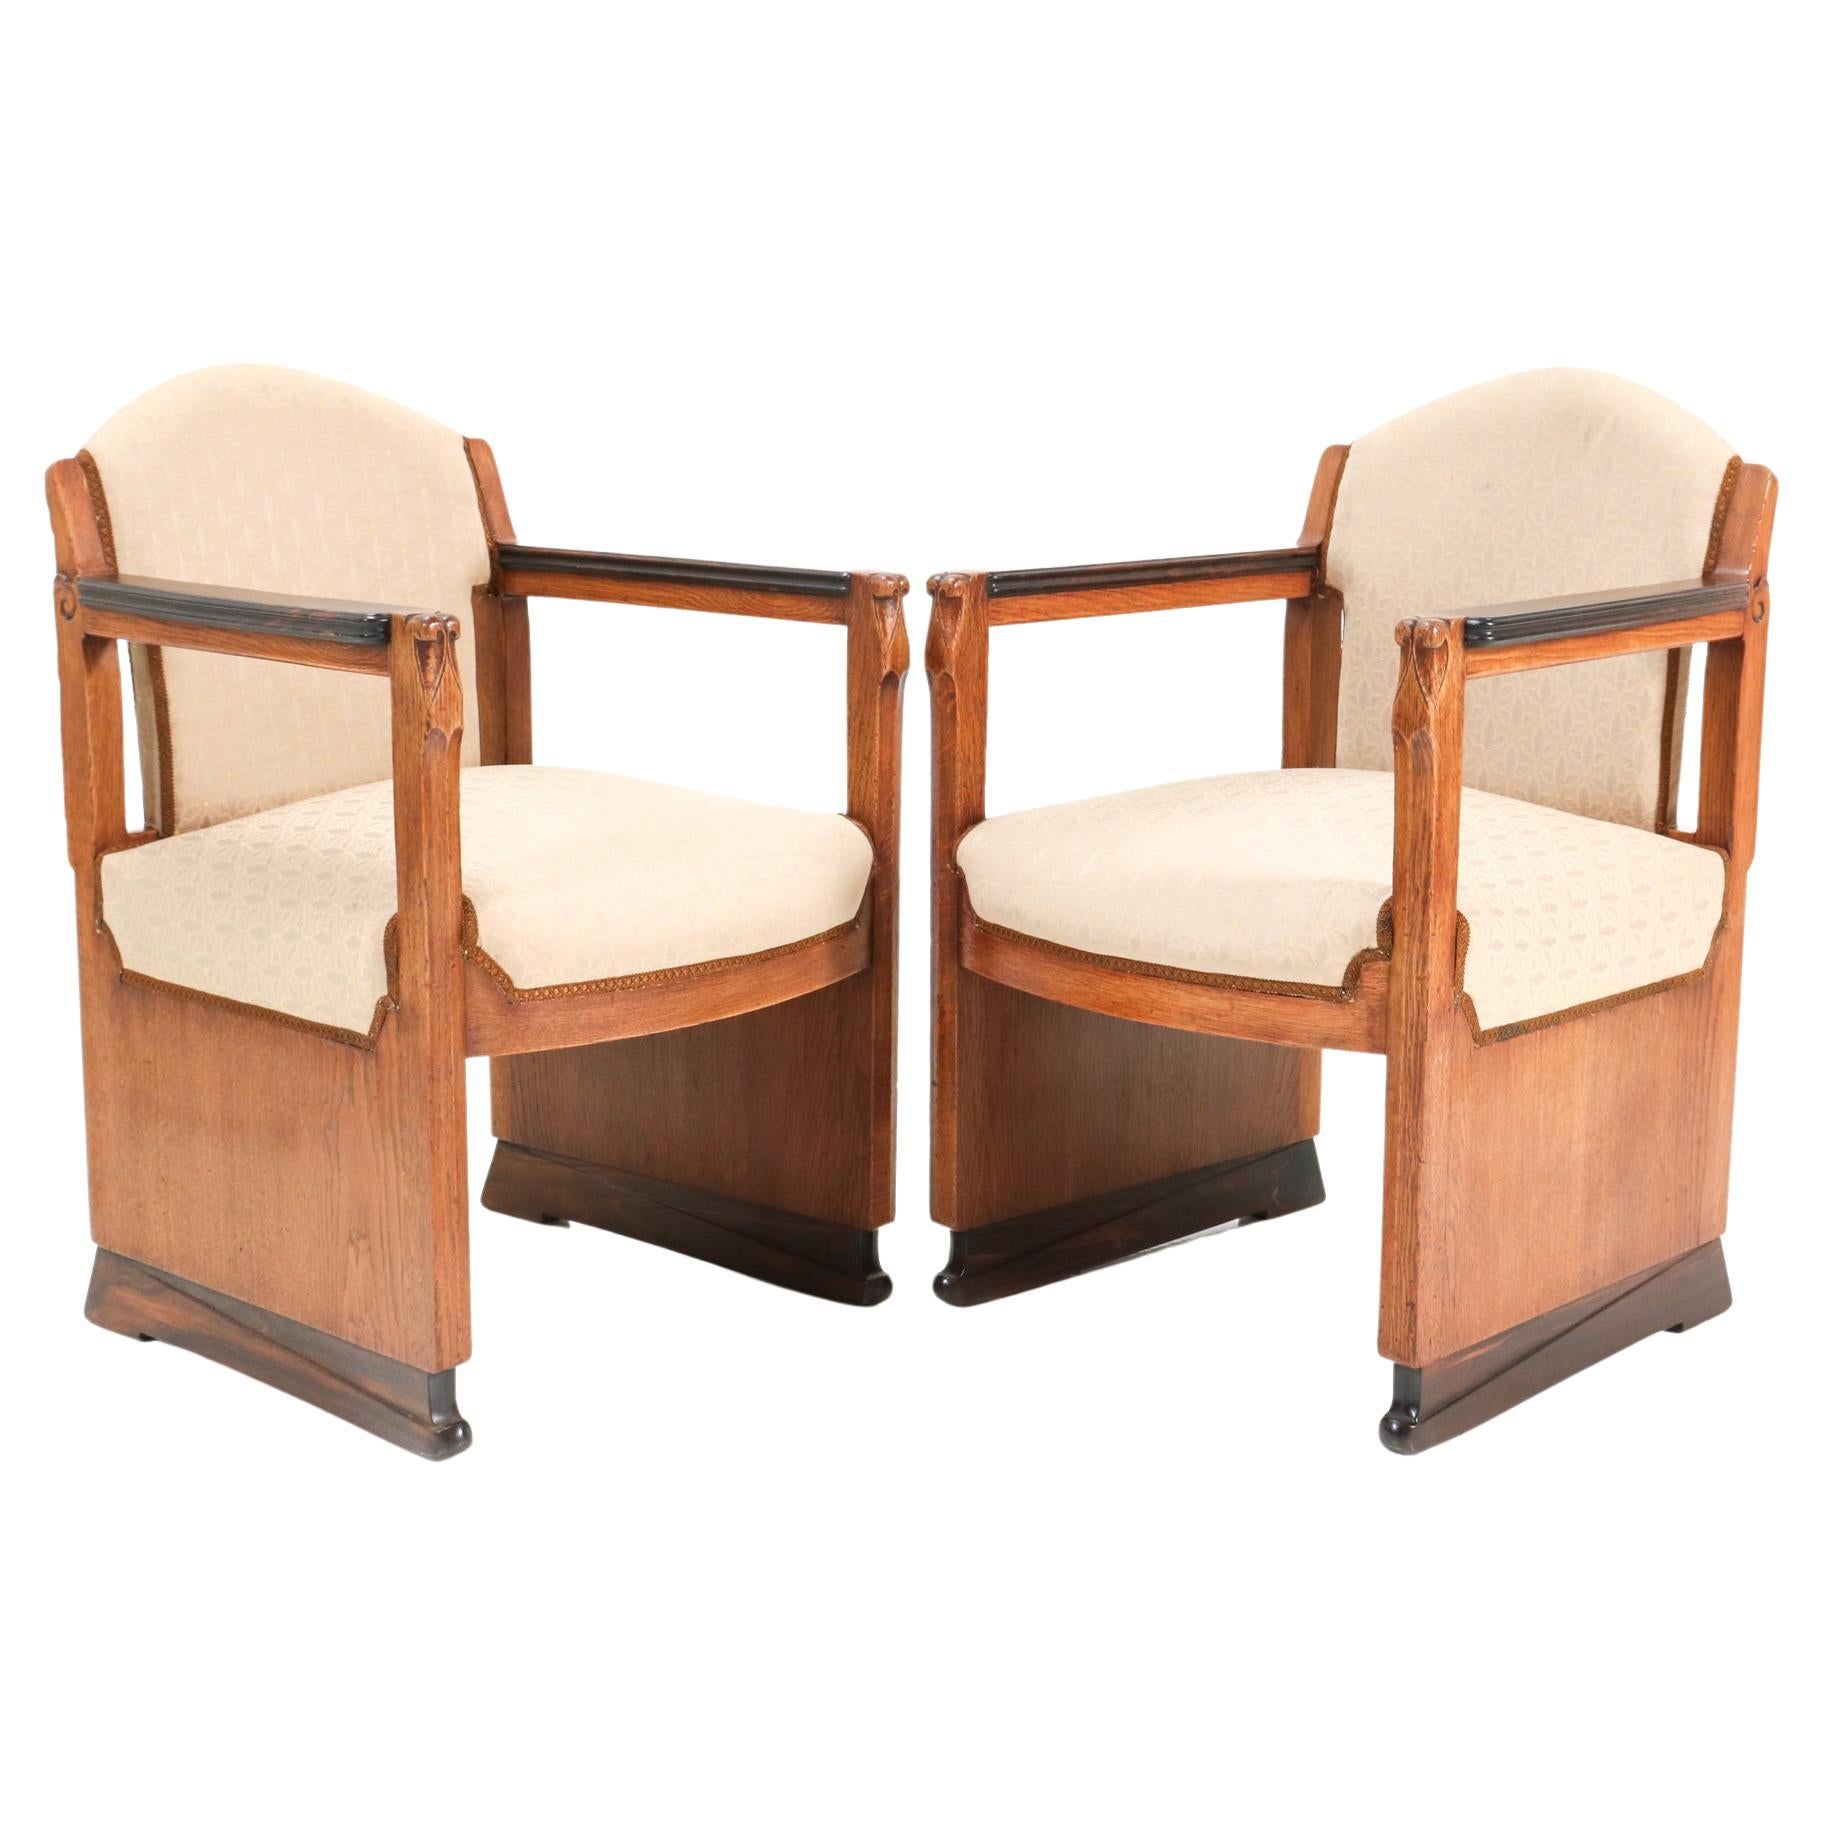 Two Oak Art Deco Amsterdamse School Armchairs by Hildo Krop for 't Woonhuys